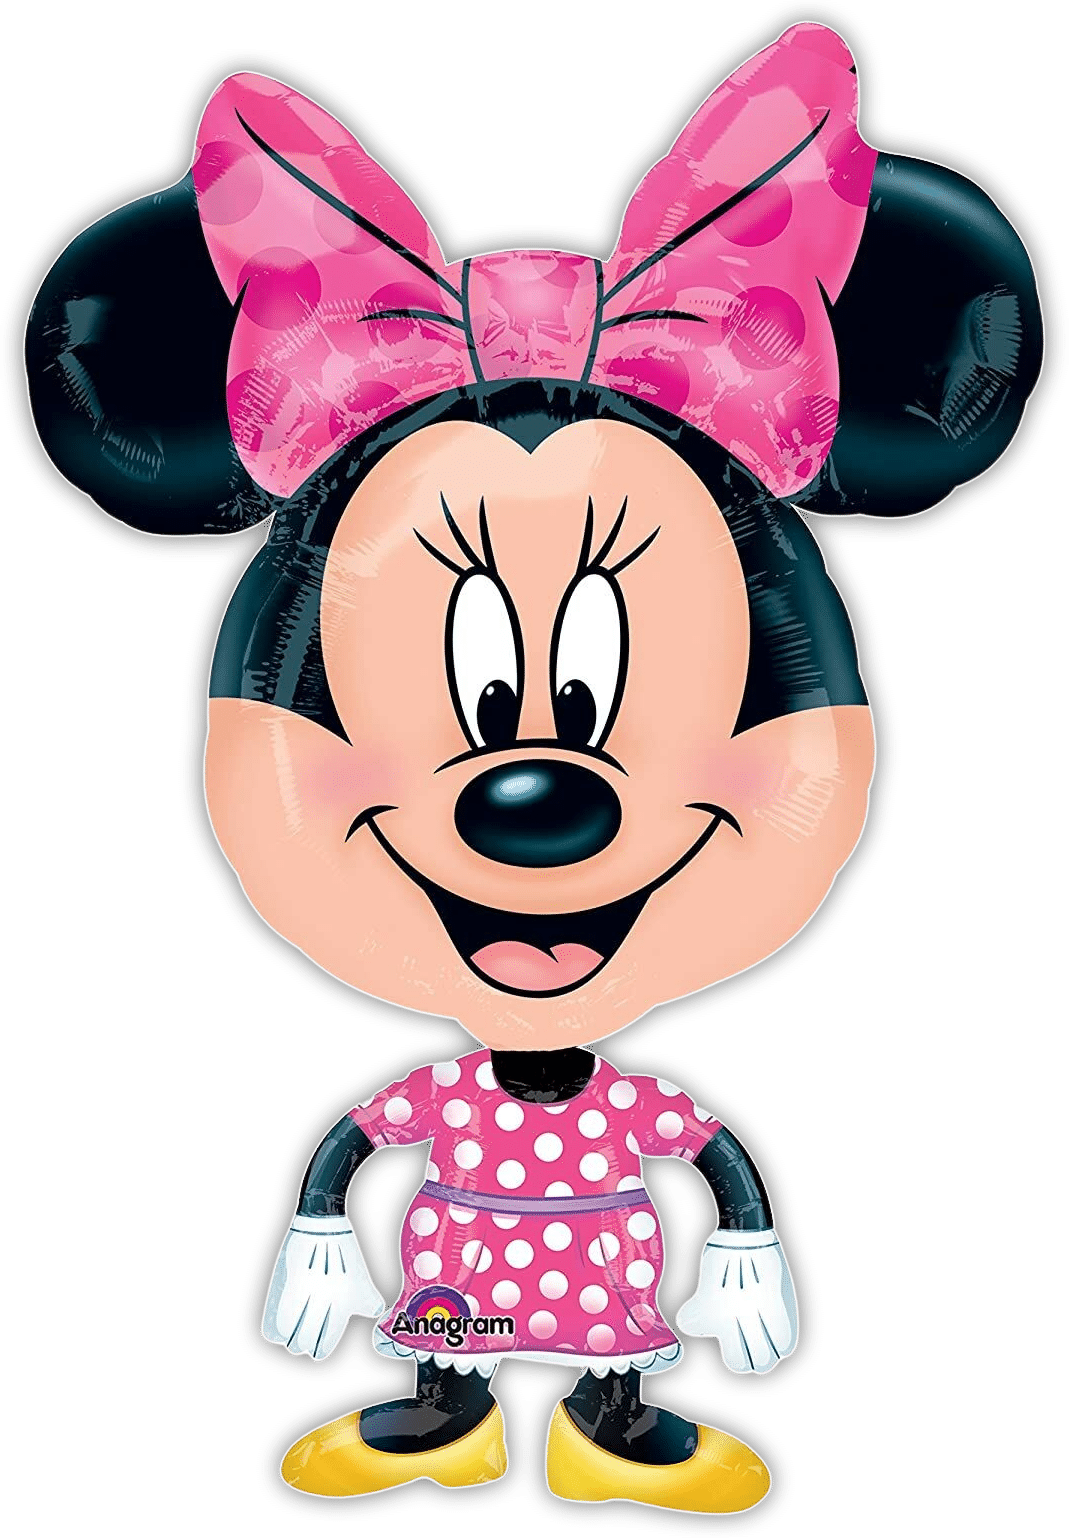 Minnie Mouse Airwalker Balloon